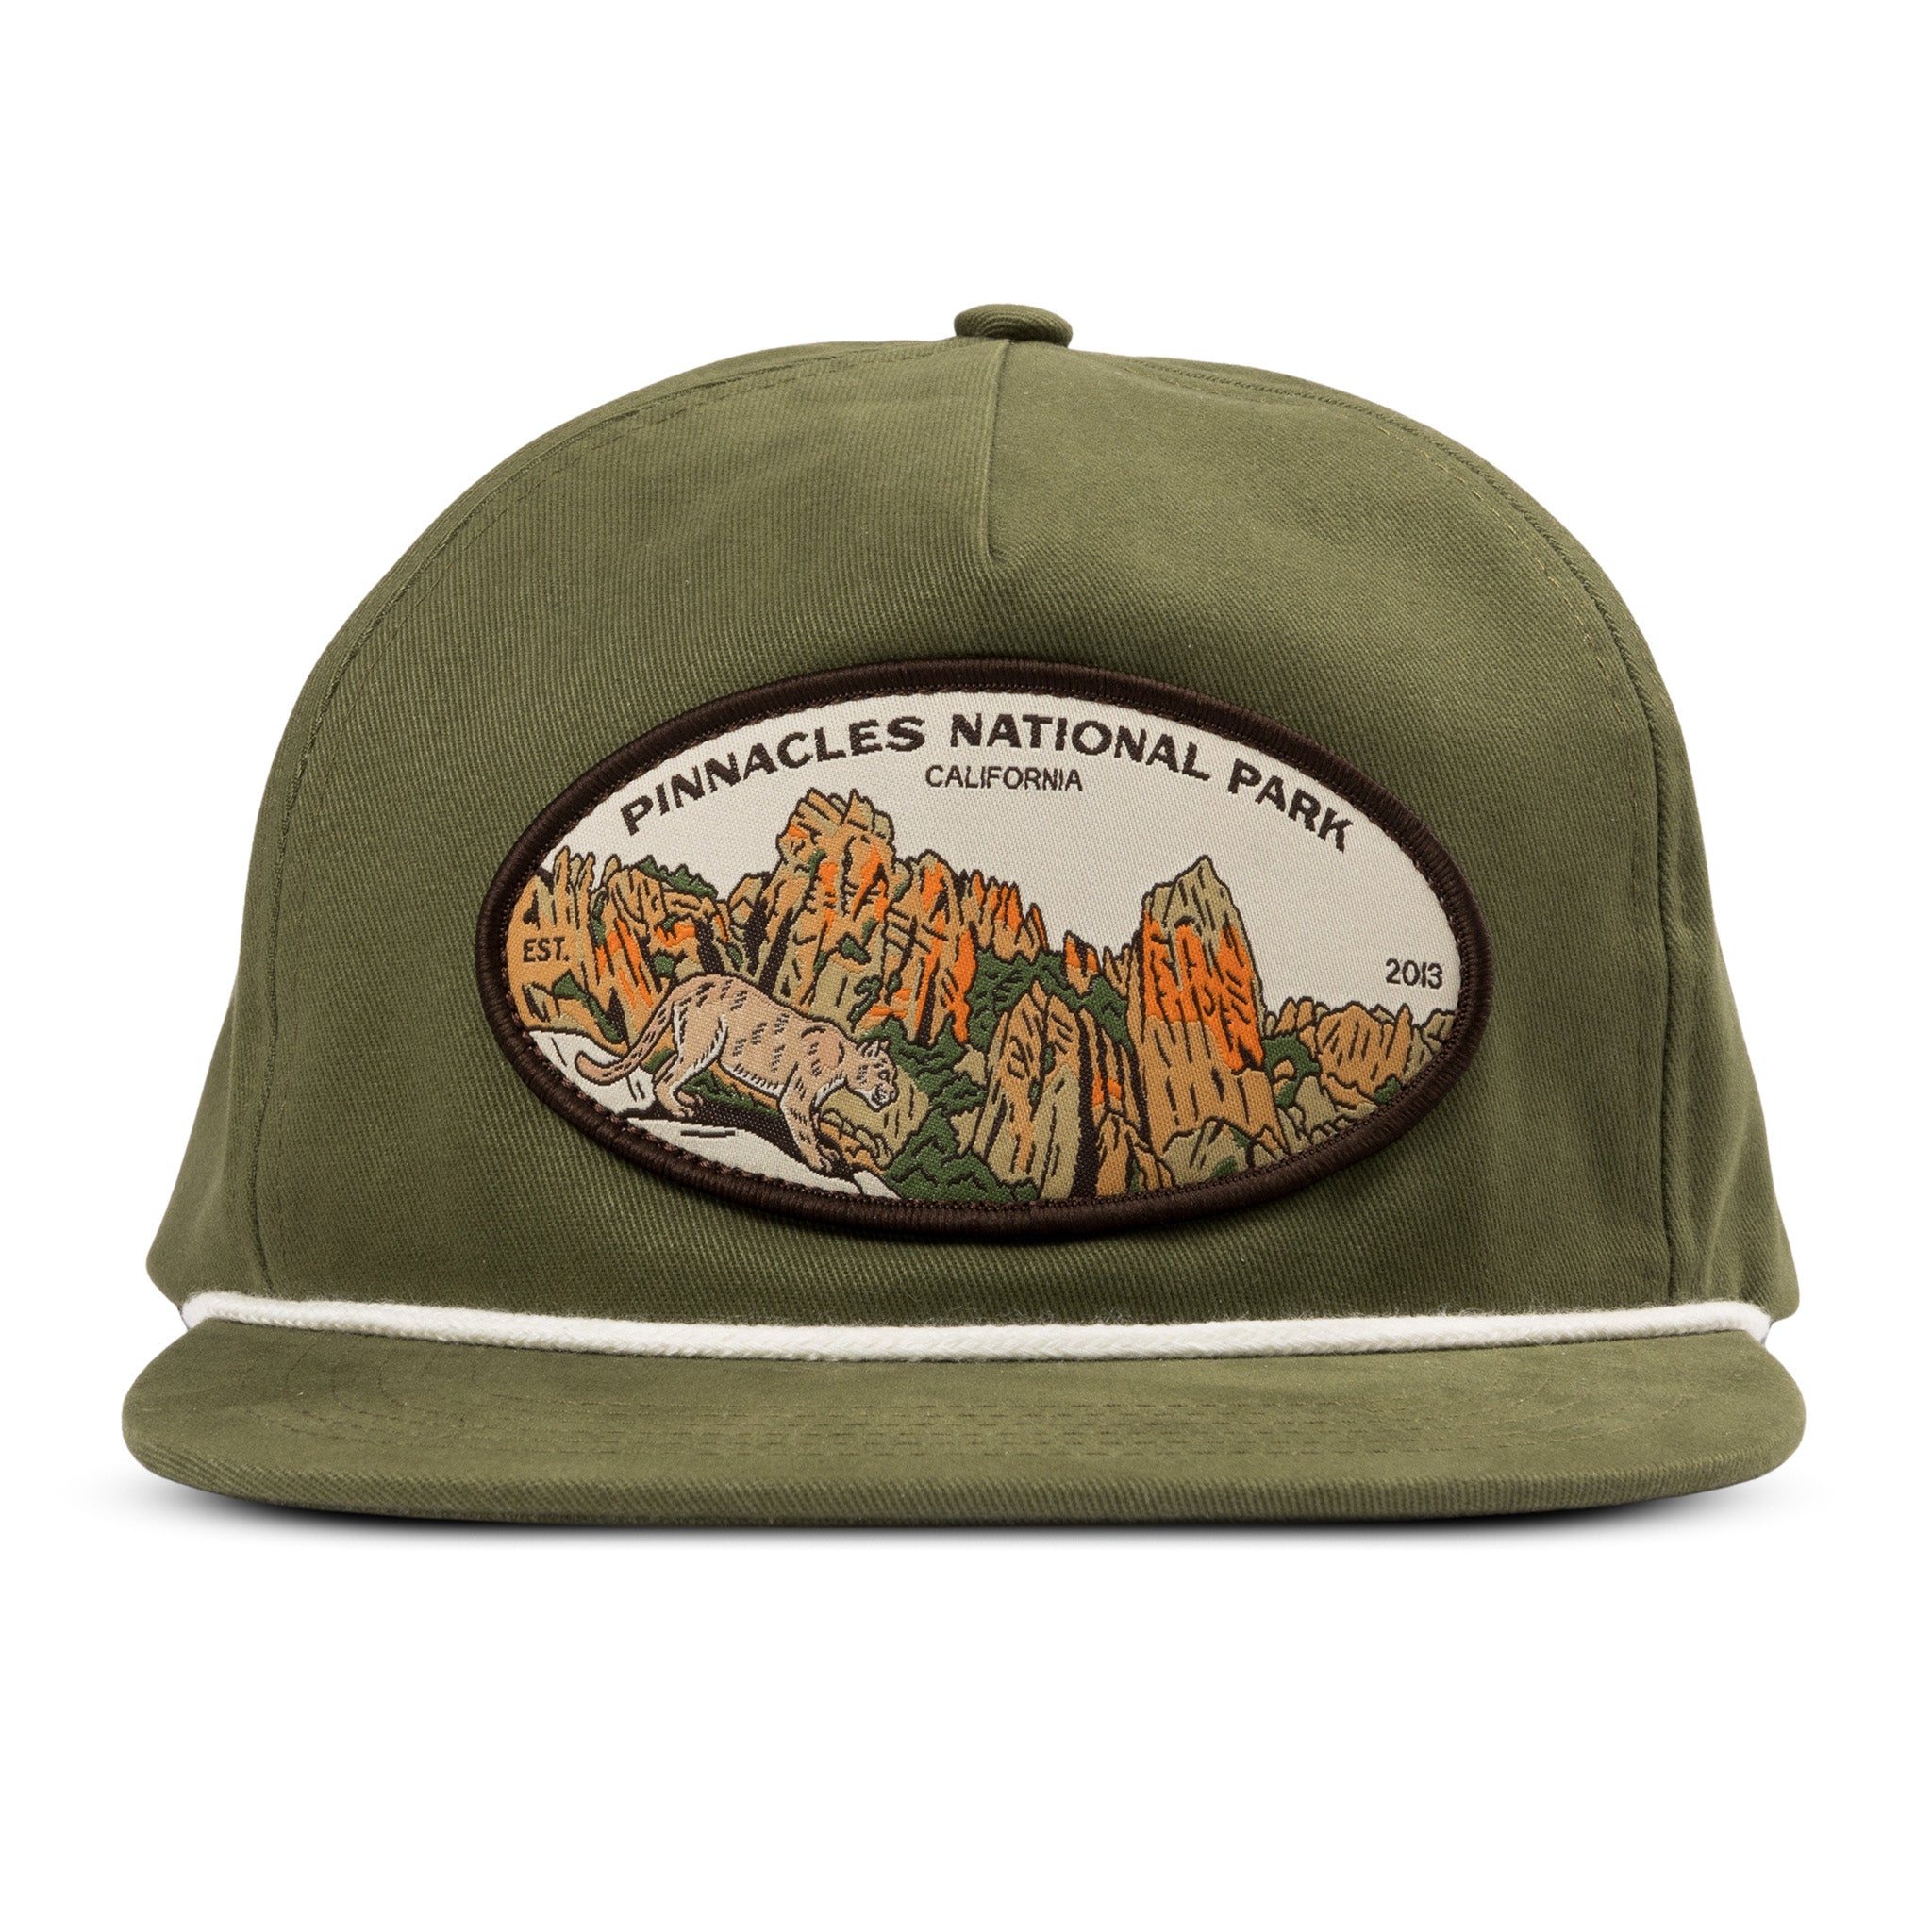 Pinnacles National Park Hat